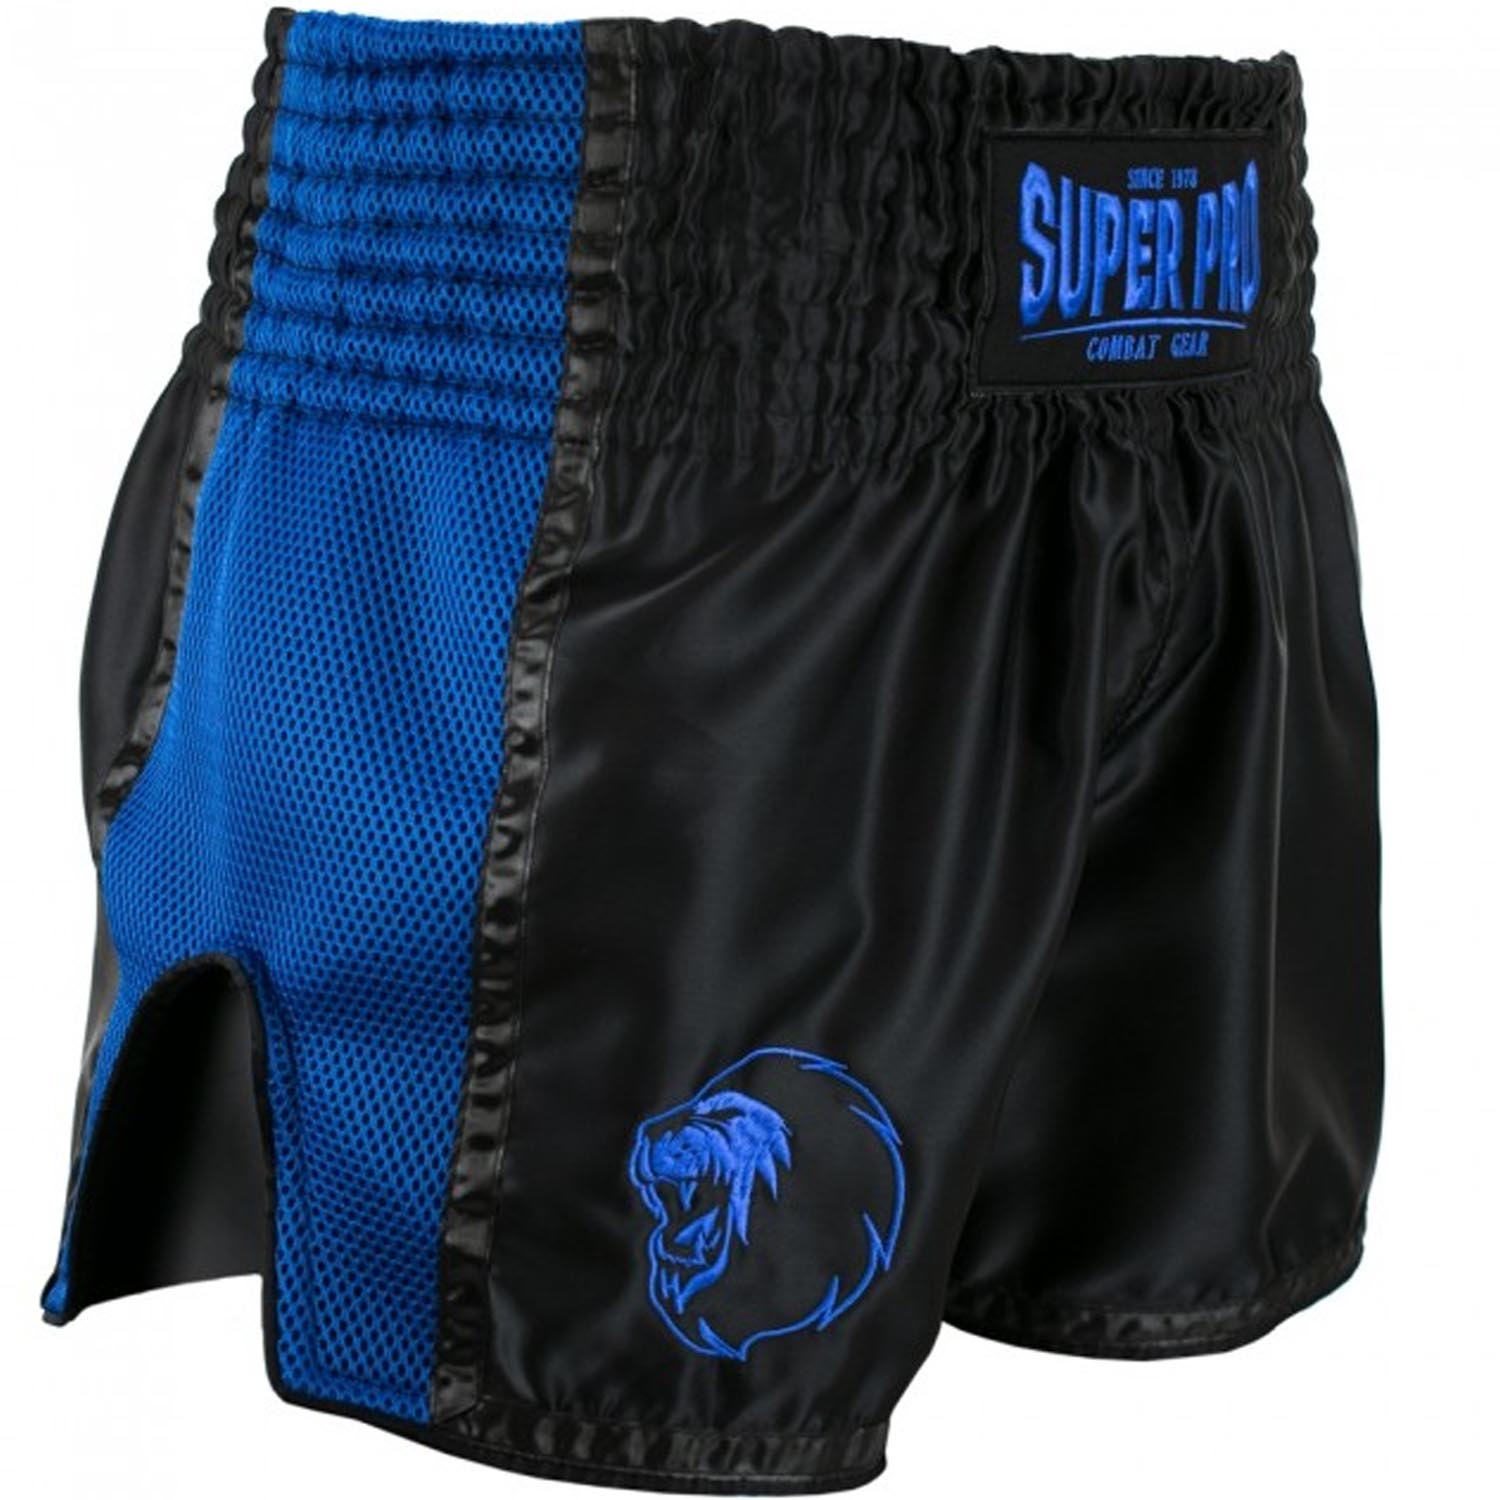 Super Pro Muay Thai Shorts, Brave, schwarz-blau